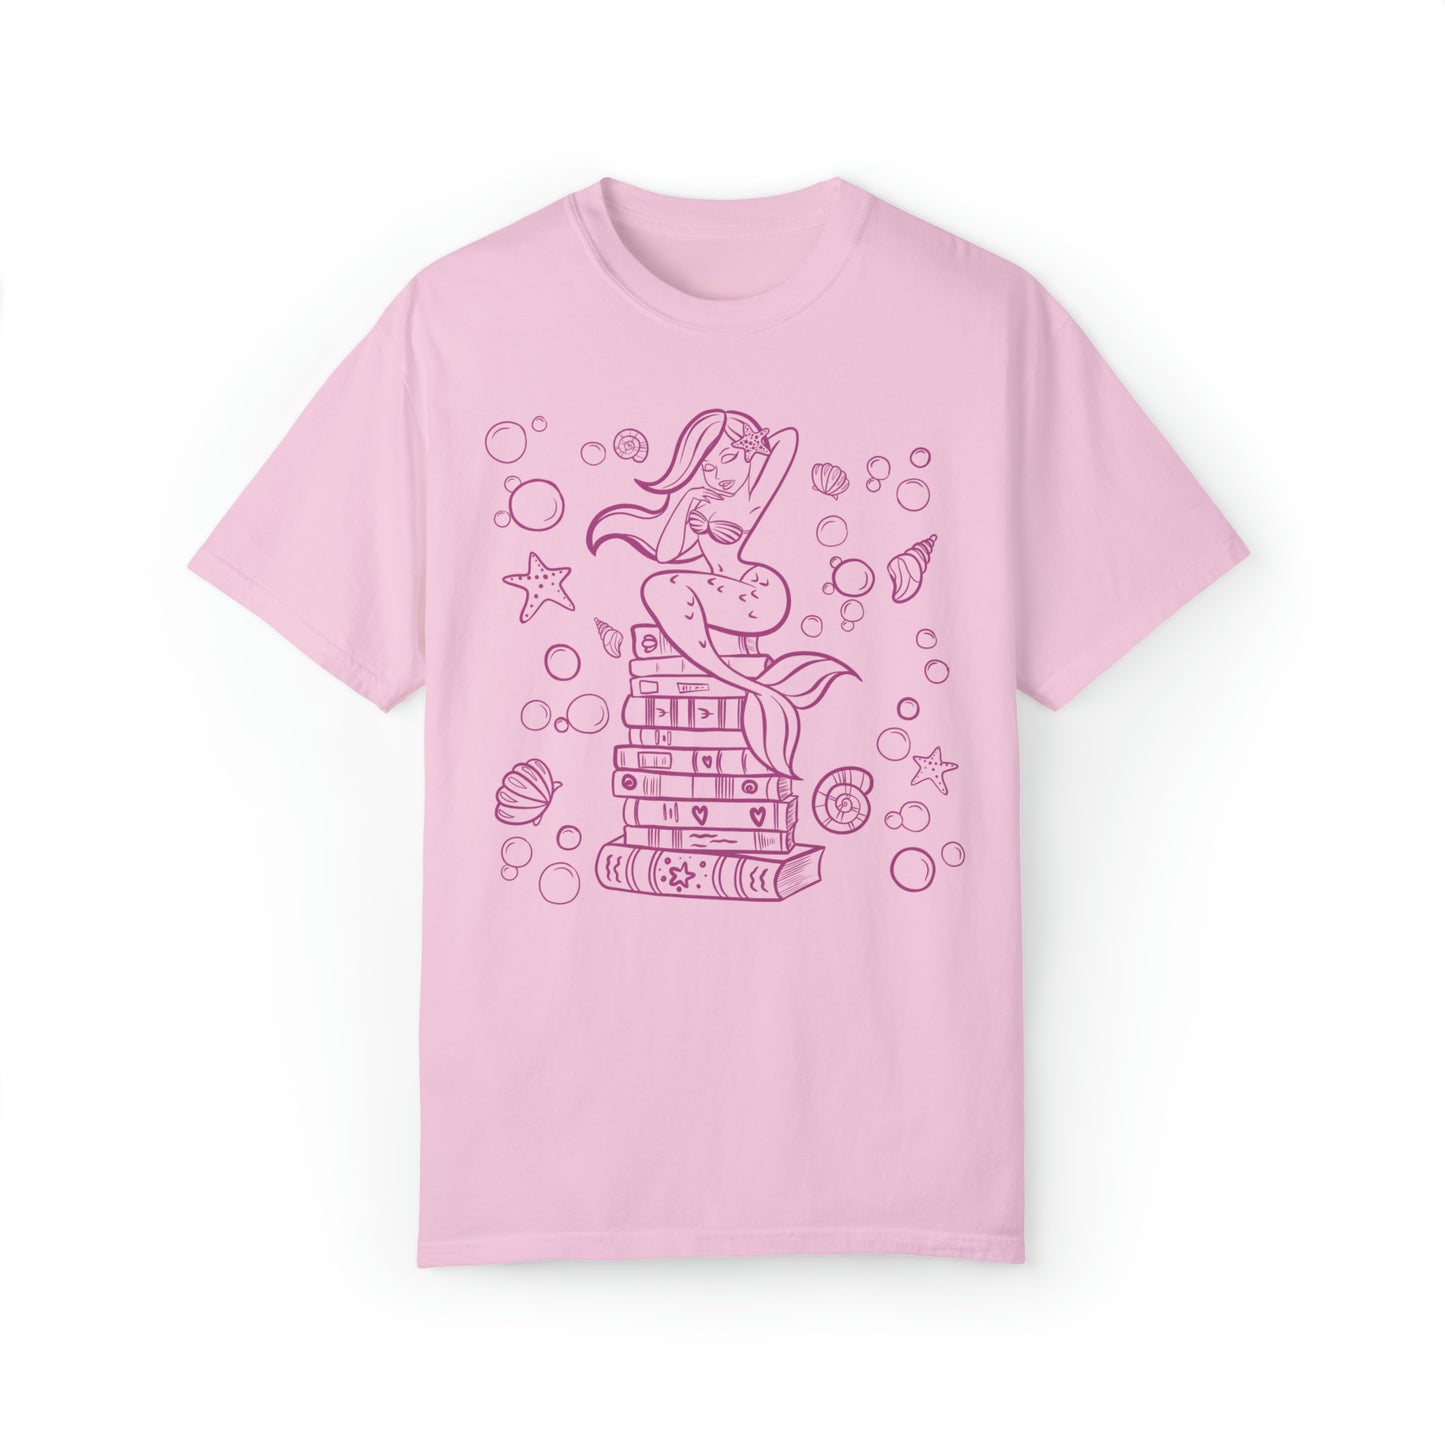 Bookish Mermaid Tee - Comfort Colors Bookish Shirt